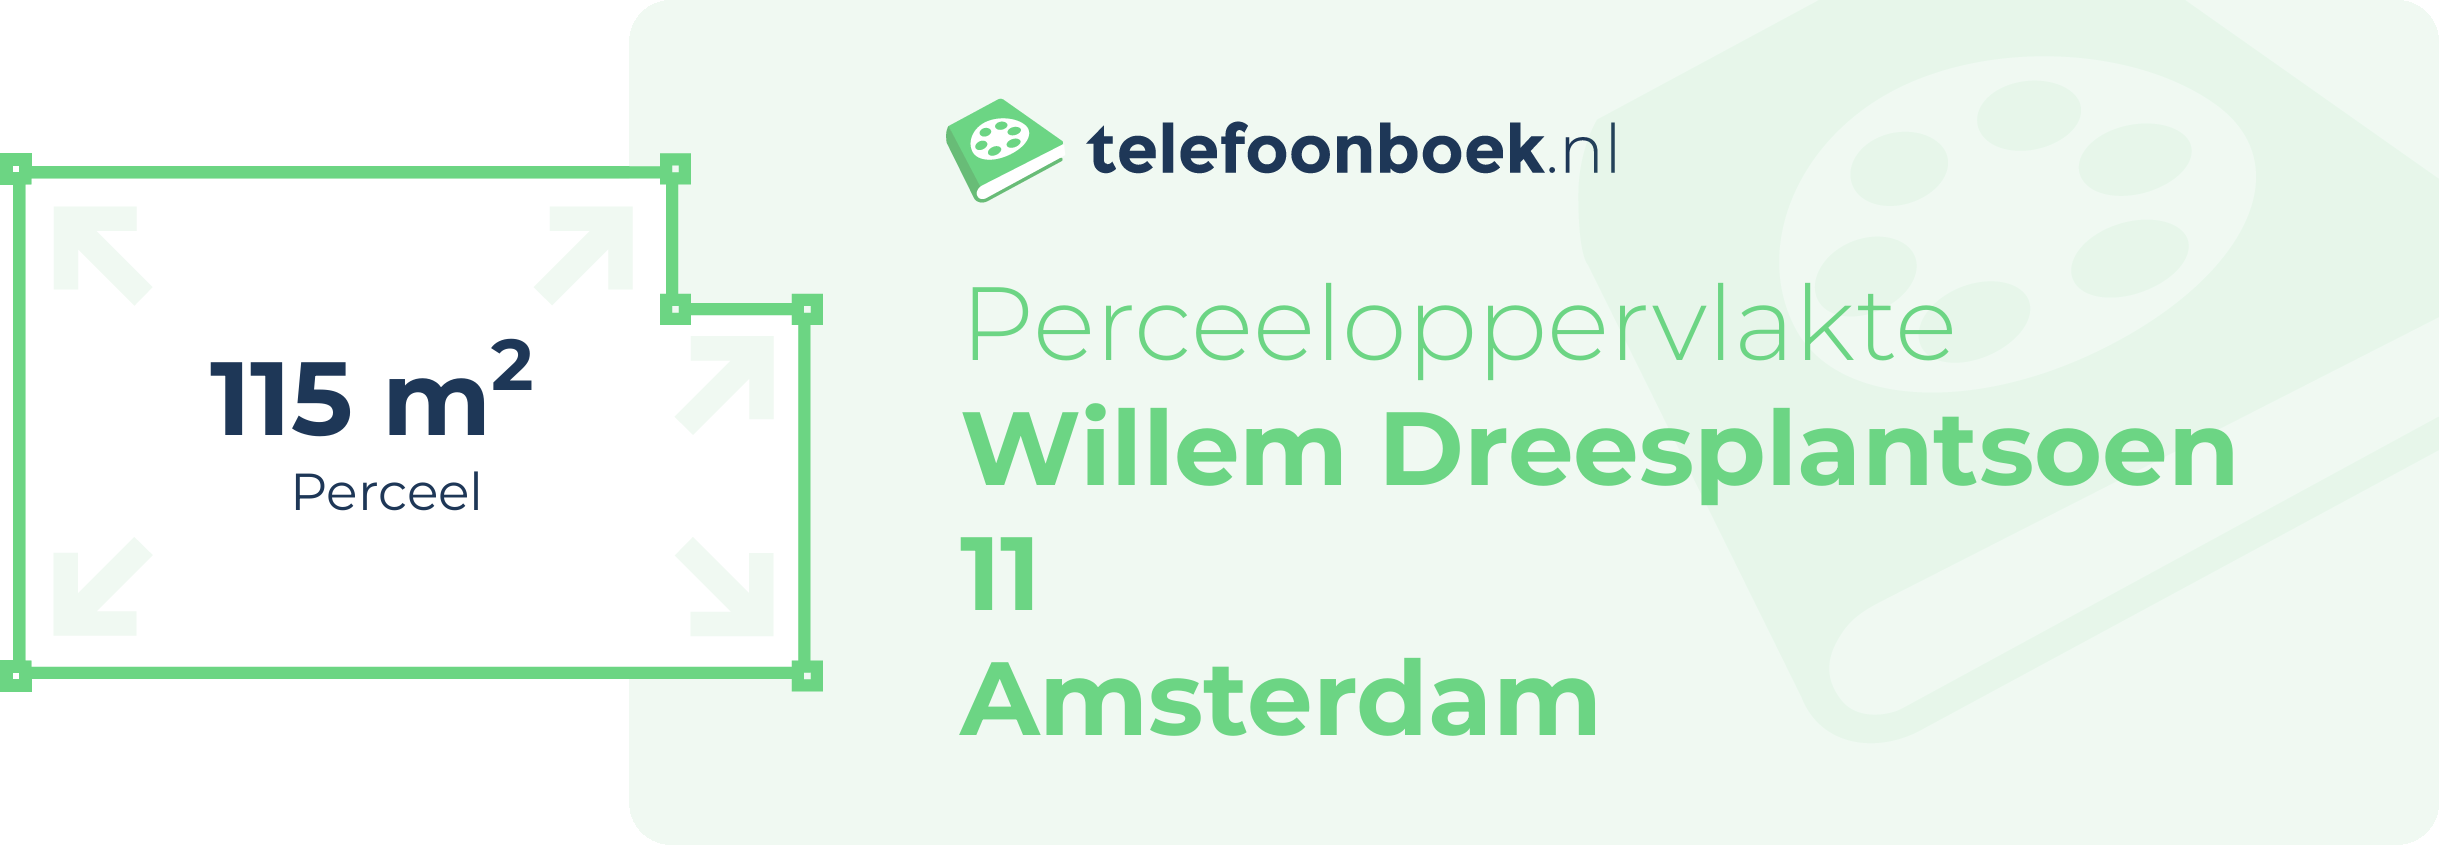 Perceeloppervlakte Willem Dreesplantsoen 11 Amsterdam